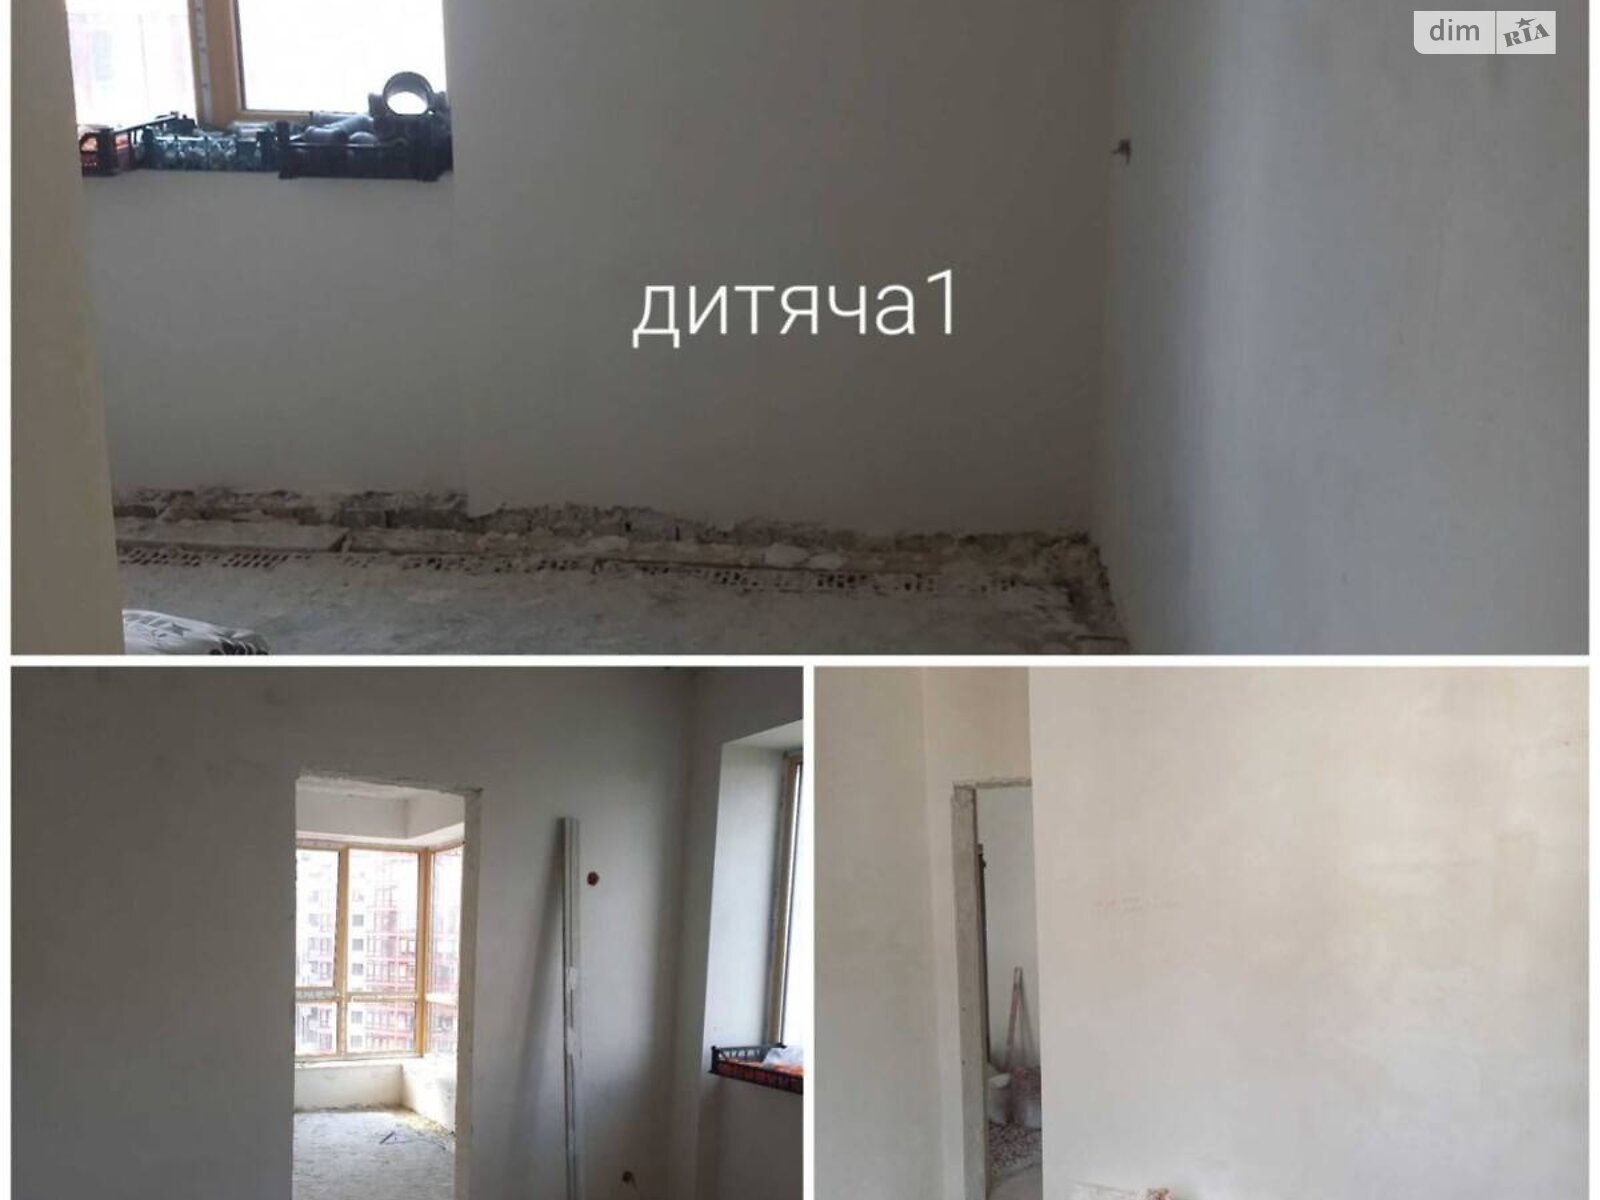 Продажа трехкомнатной квартиры в Волчинце, на ул. Василия Симоненко, фото 1